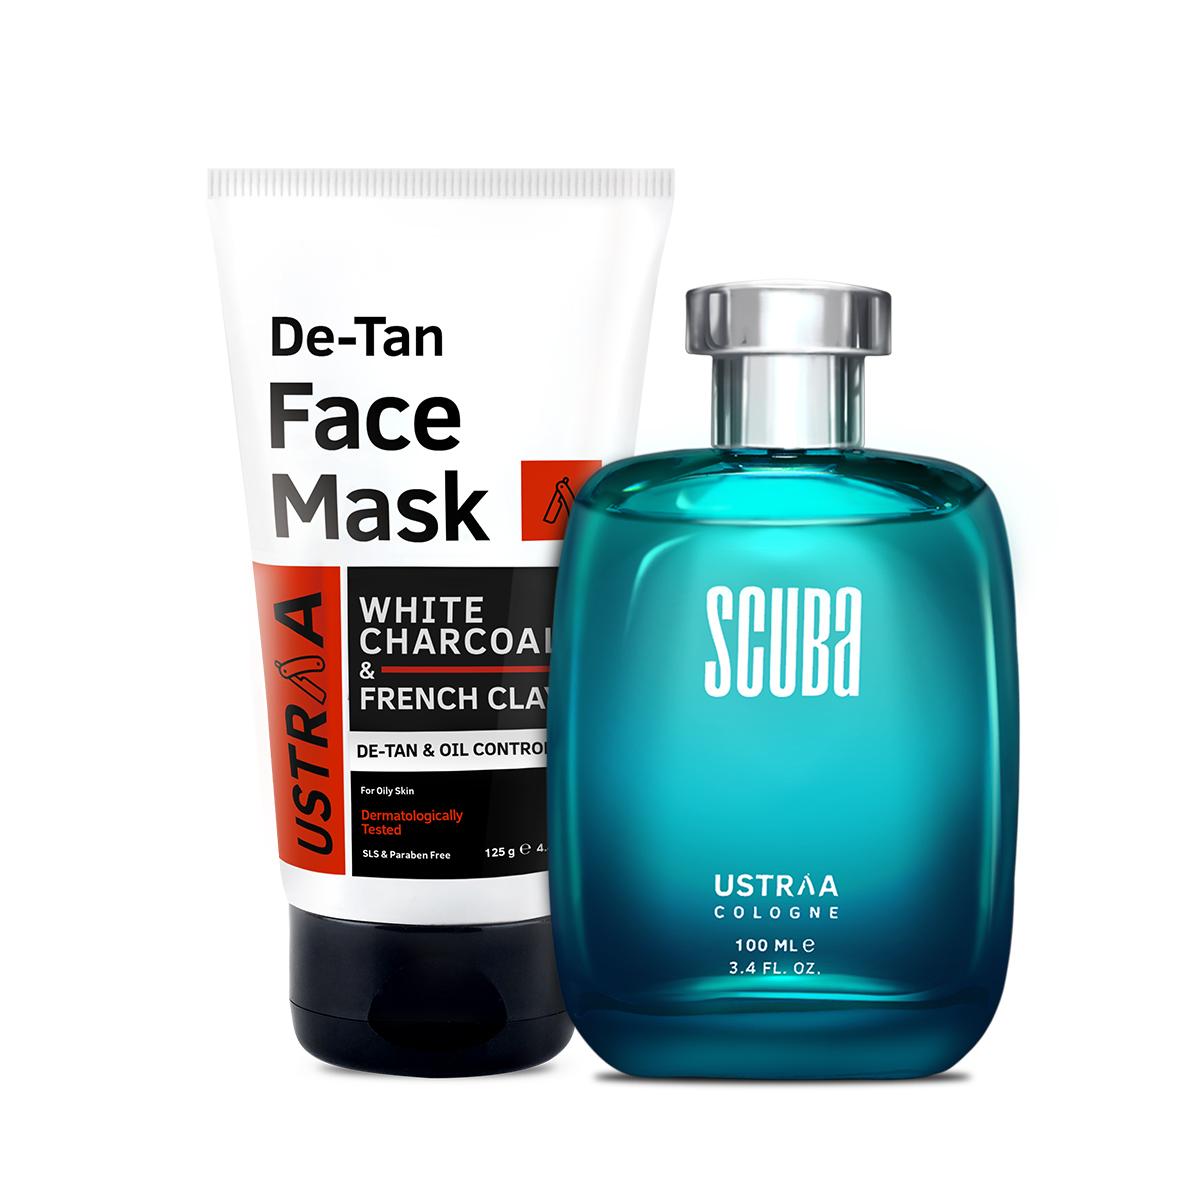 Face Mask -Oily Skin & Scuba Cologne Perfume for Men